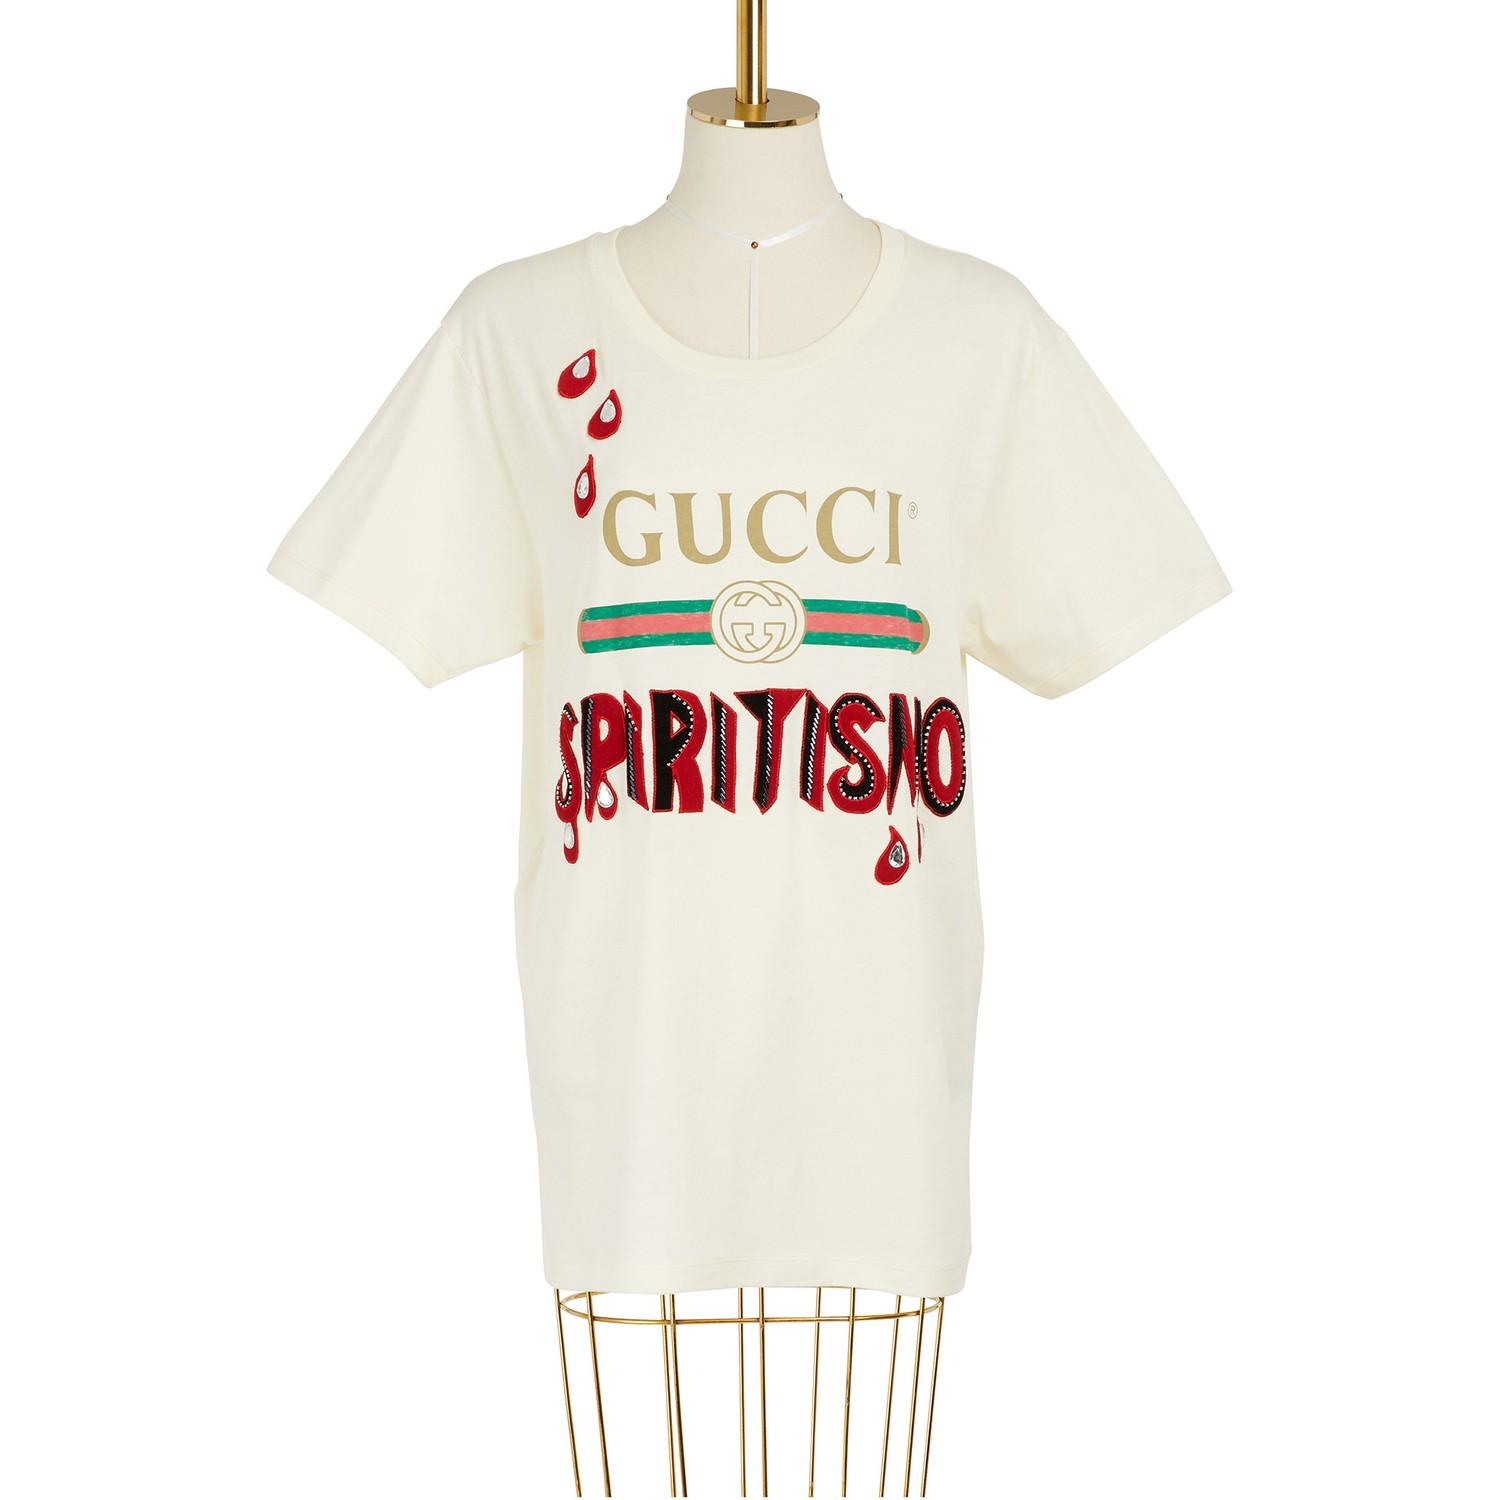 Gucci Spiritismo T-shirt in White | Lyst